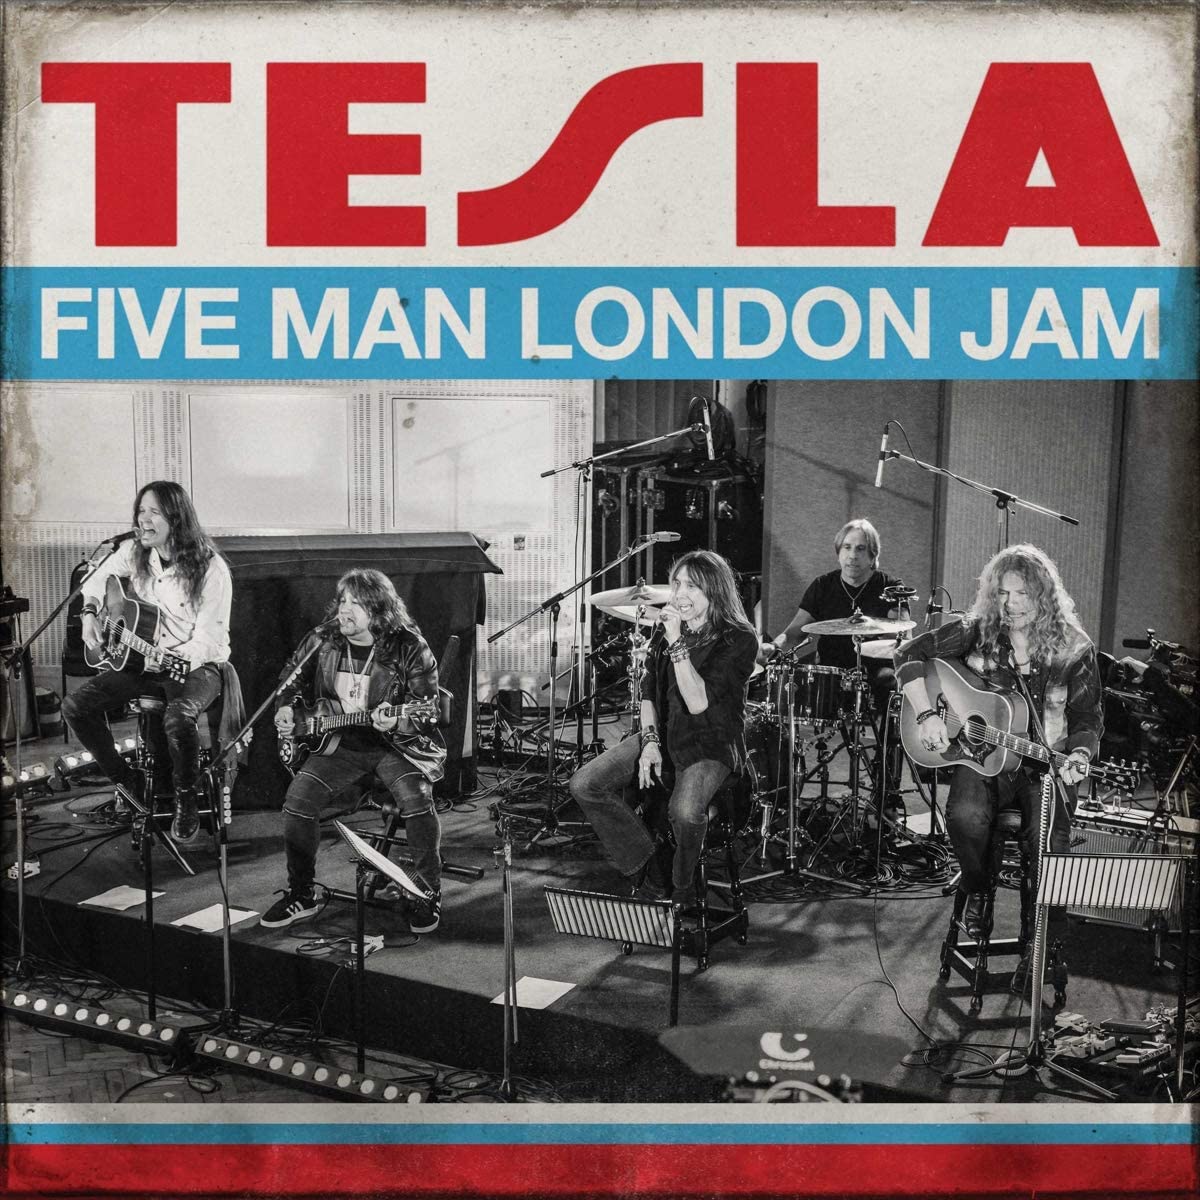 Copertina Vinile 33 giri Five Man London Jam di Tesla